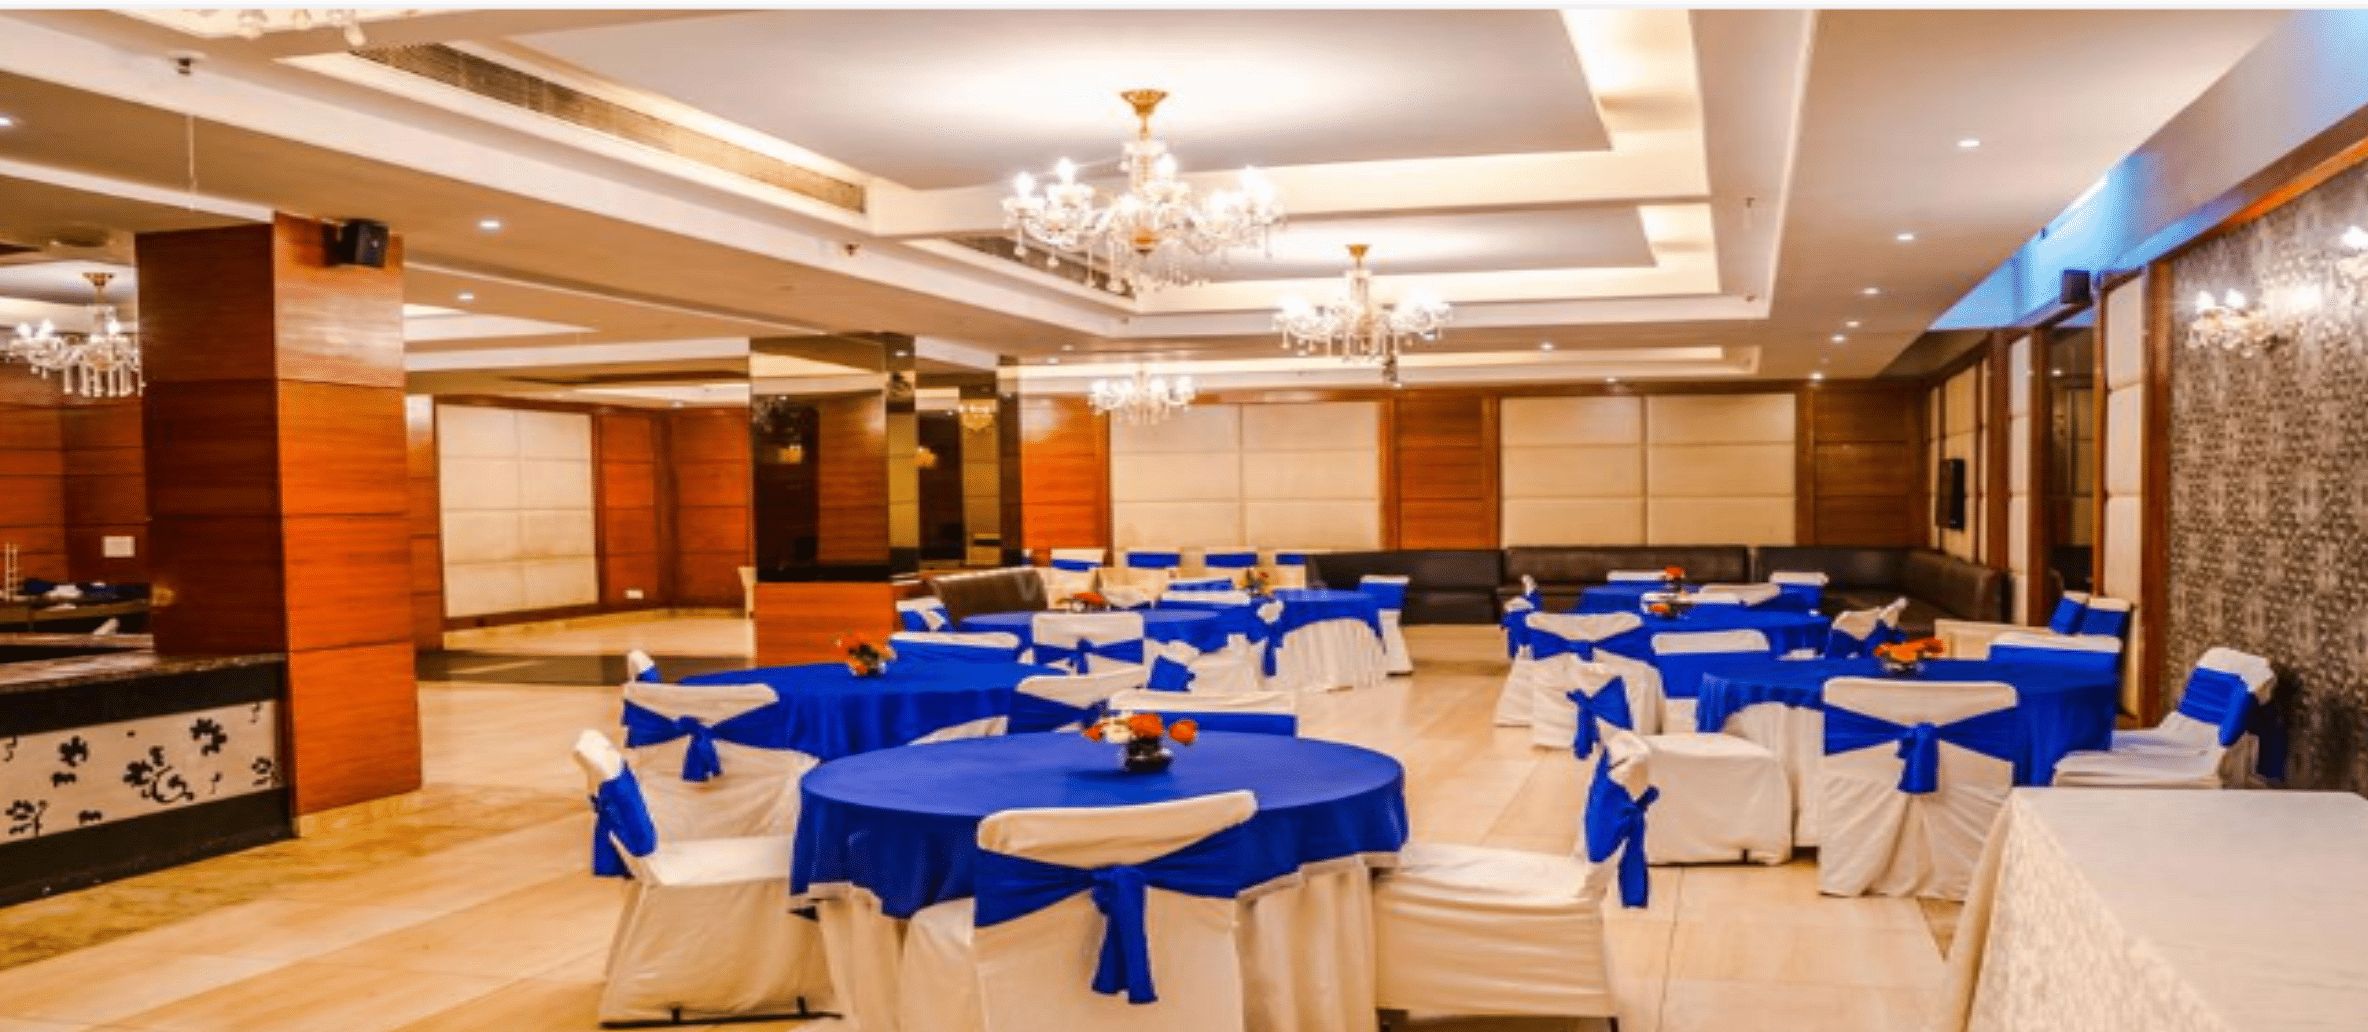 Hotel Ikhaya in Greater Kailash 1, Delhi